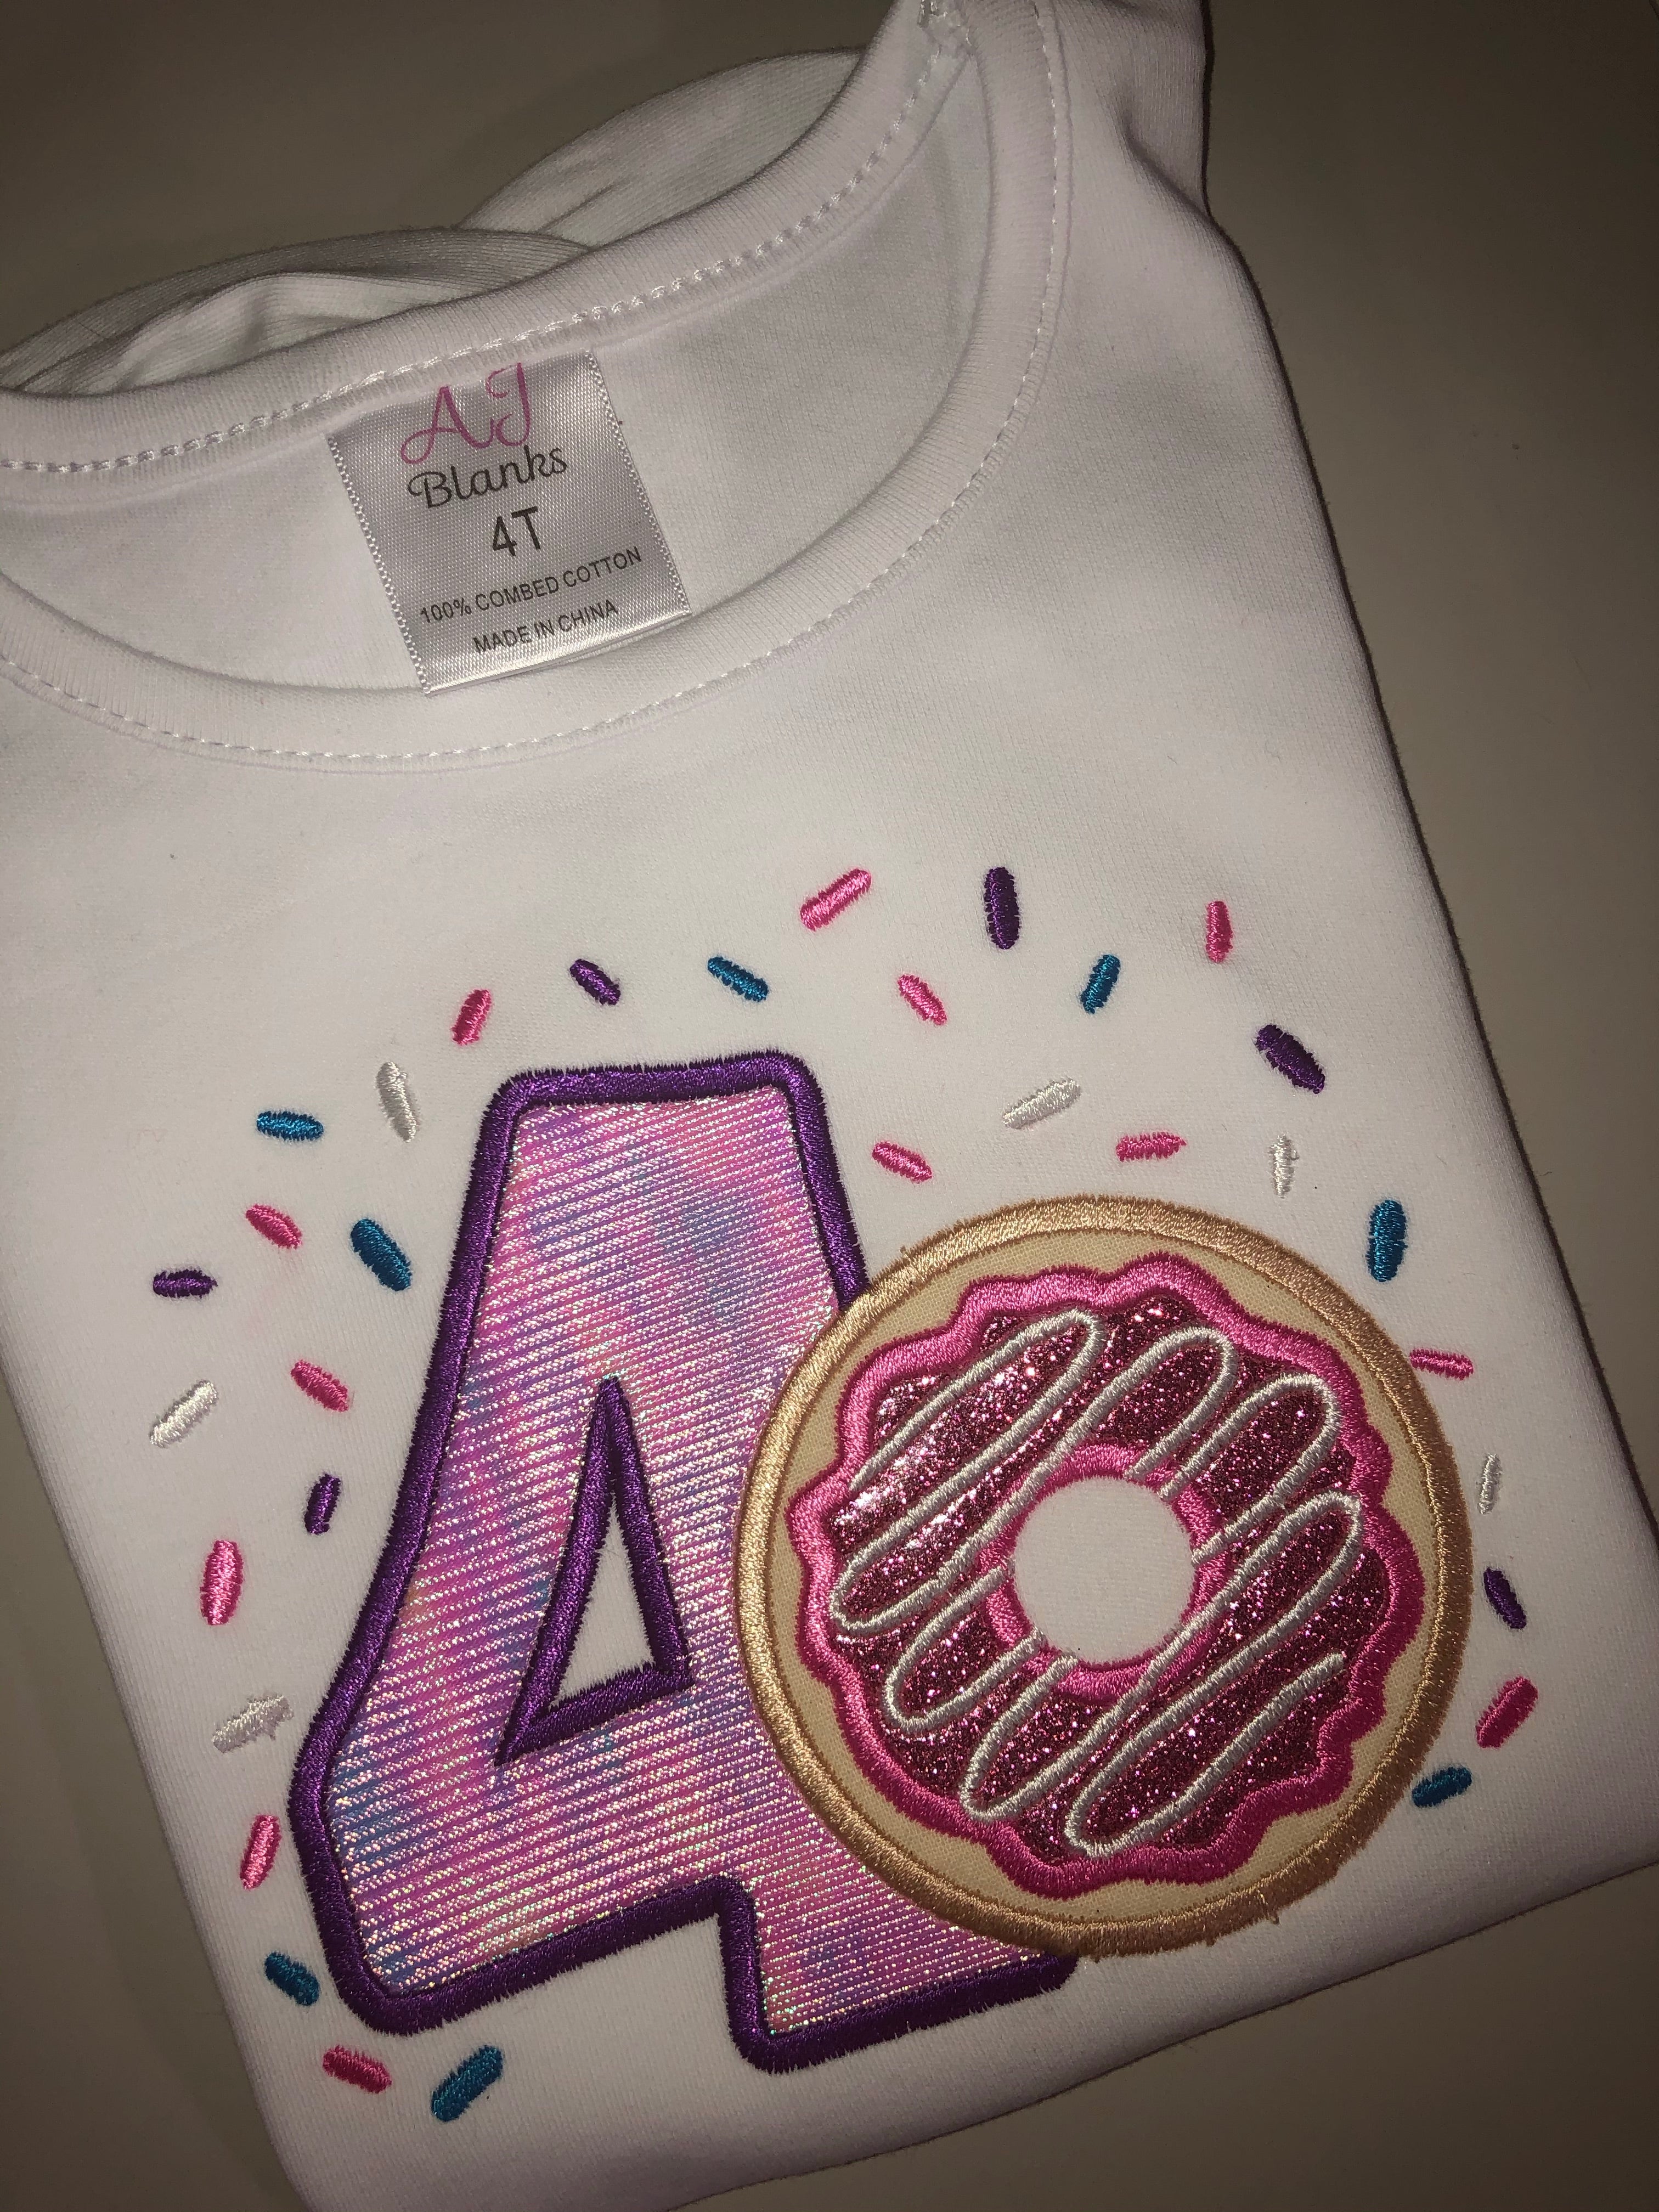 Donut Birthday Girls T-Shirt